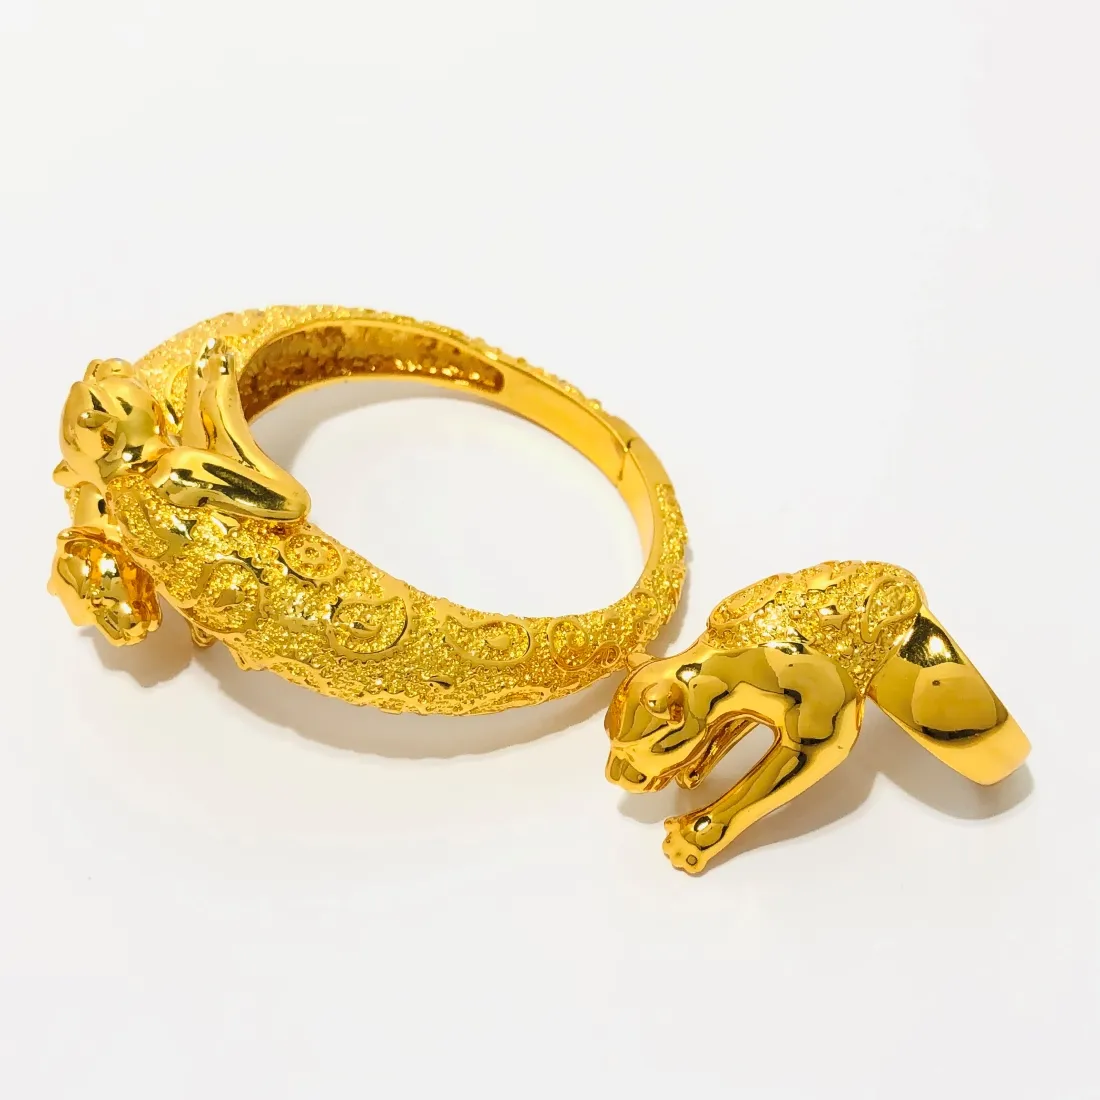 Golden Star jewelry set 18k Gold Plated Animal High Quality ring Bracelet set for women